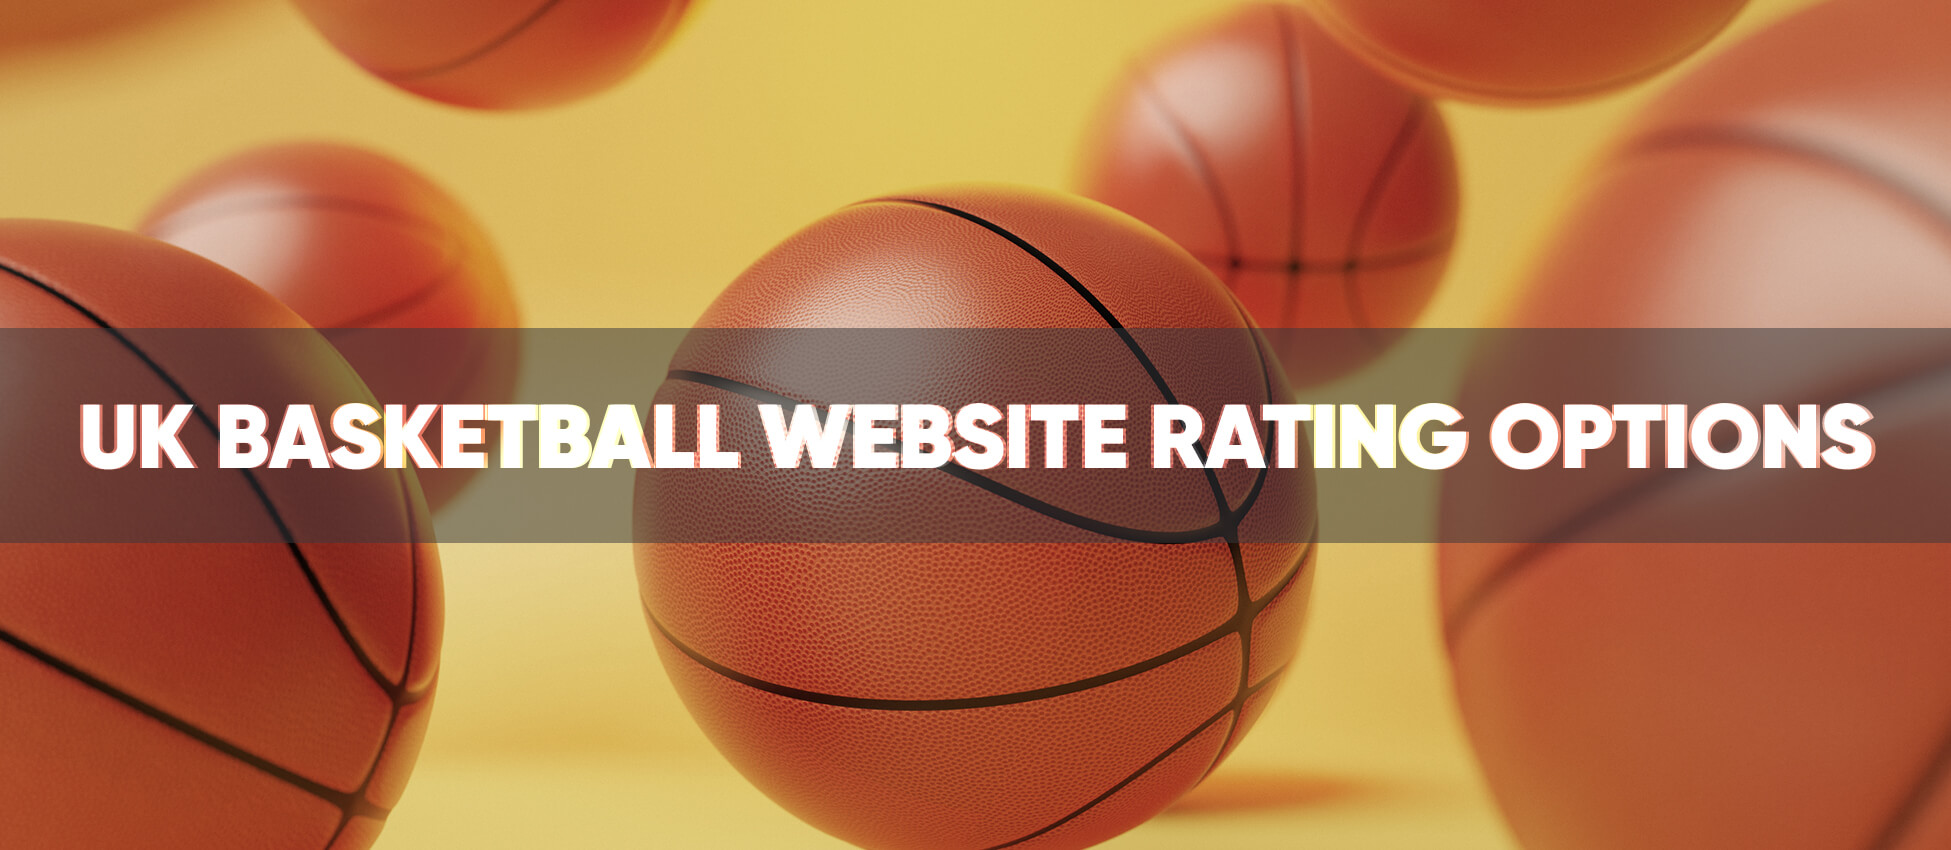 UK Basketball Website Rating Options